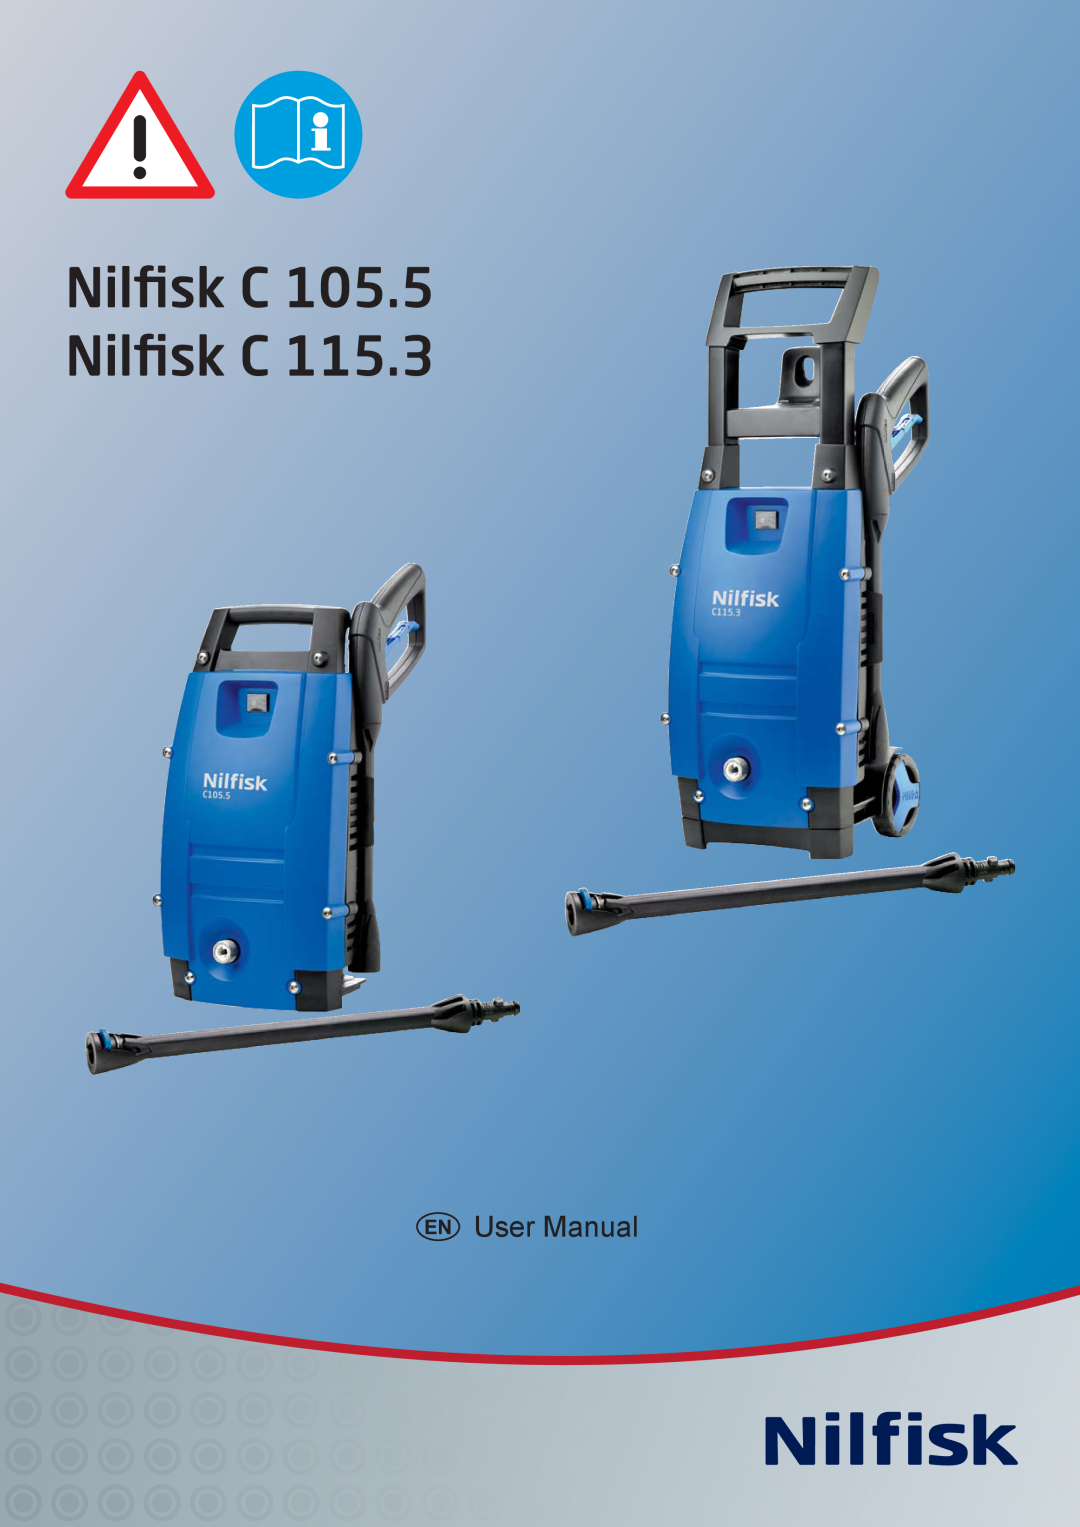 Nilfisk-ALTO C 115.3 user manual Nilfisk C 105.5 Nilfisk C 